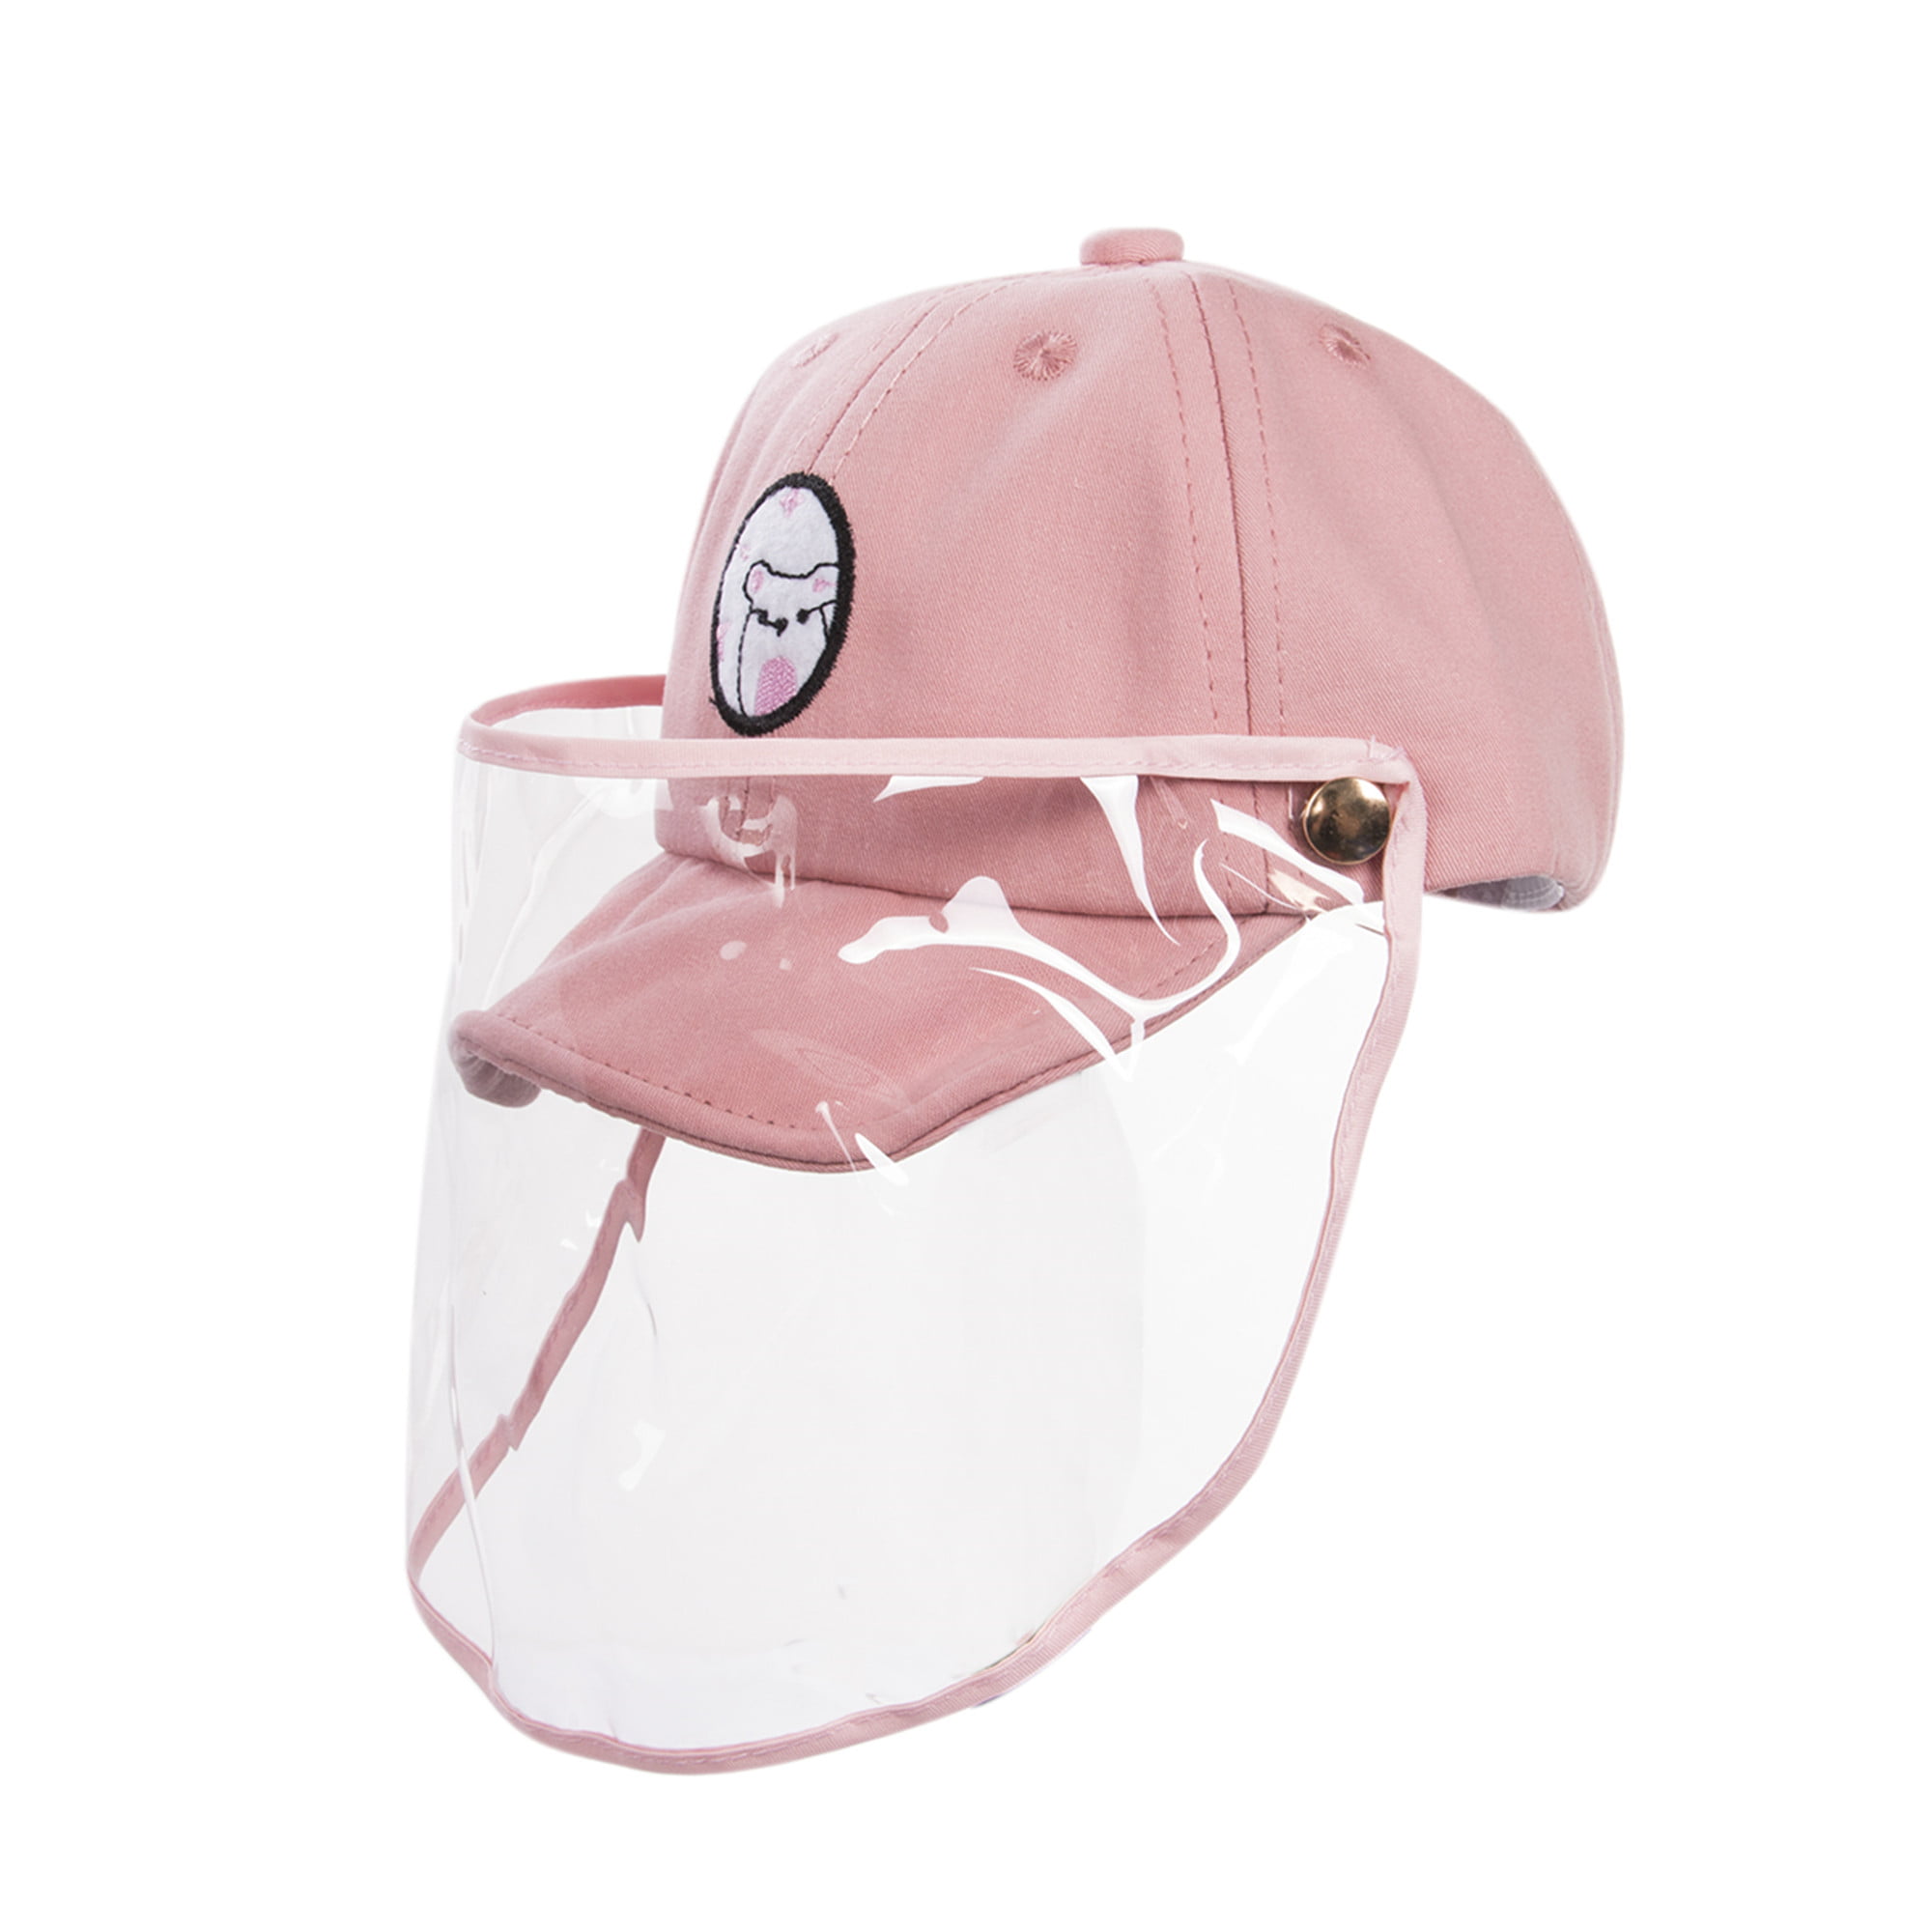 Baby Protective Cover Hat Dustproof Anti-saliva Face Shield Baseball Cap